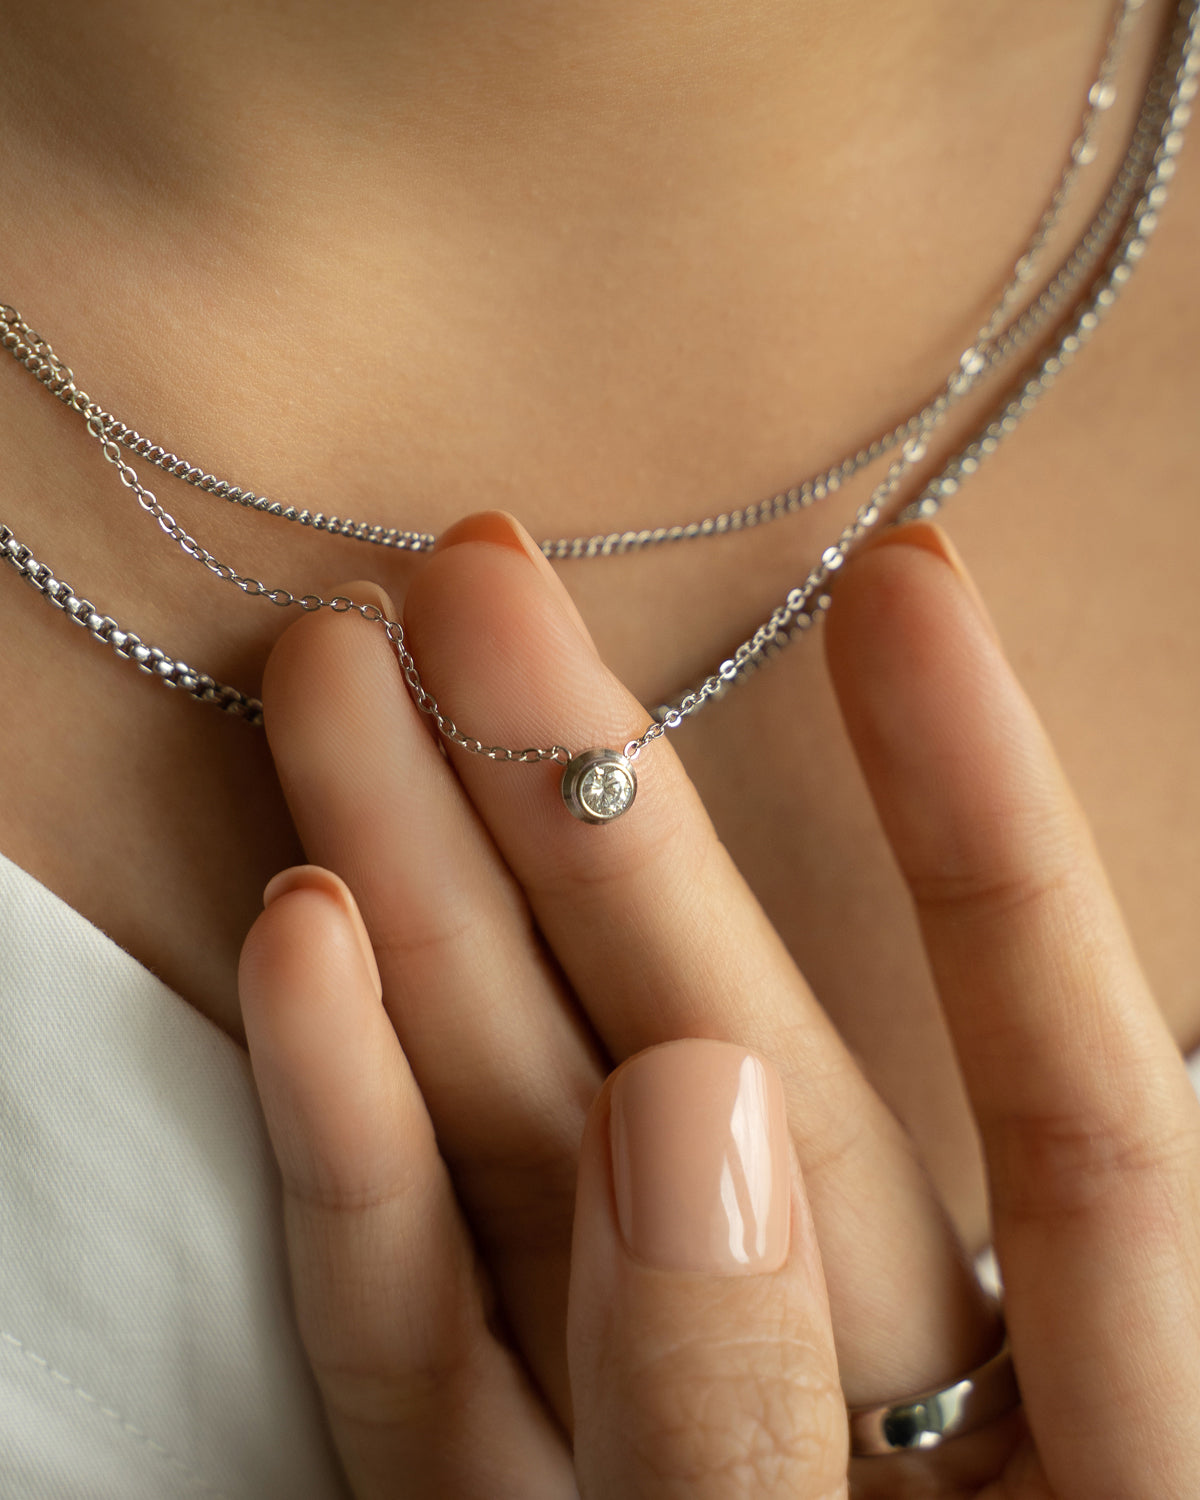 The perfect silver solitaire diamond pendant necklace.